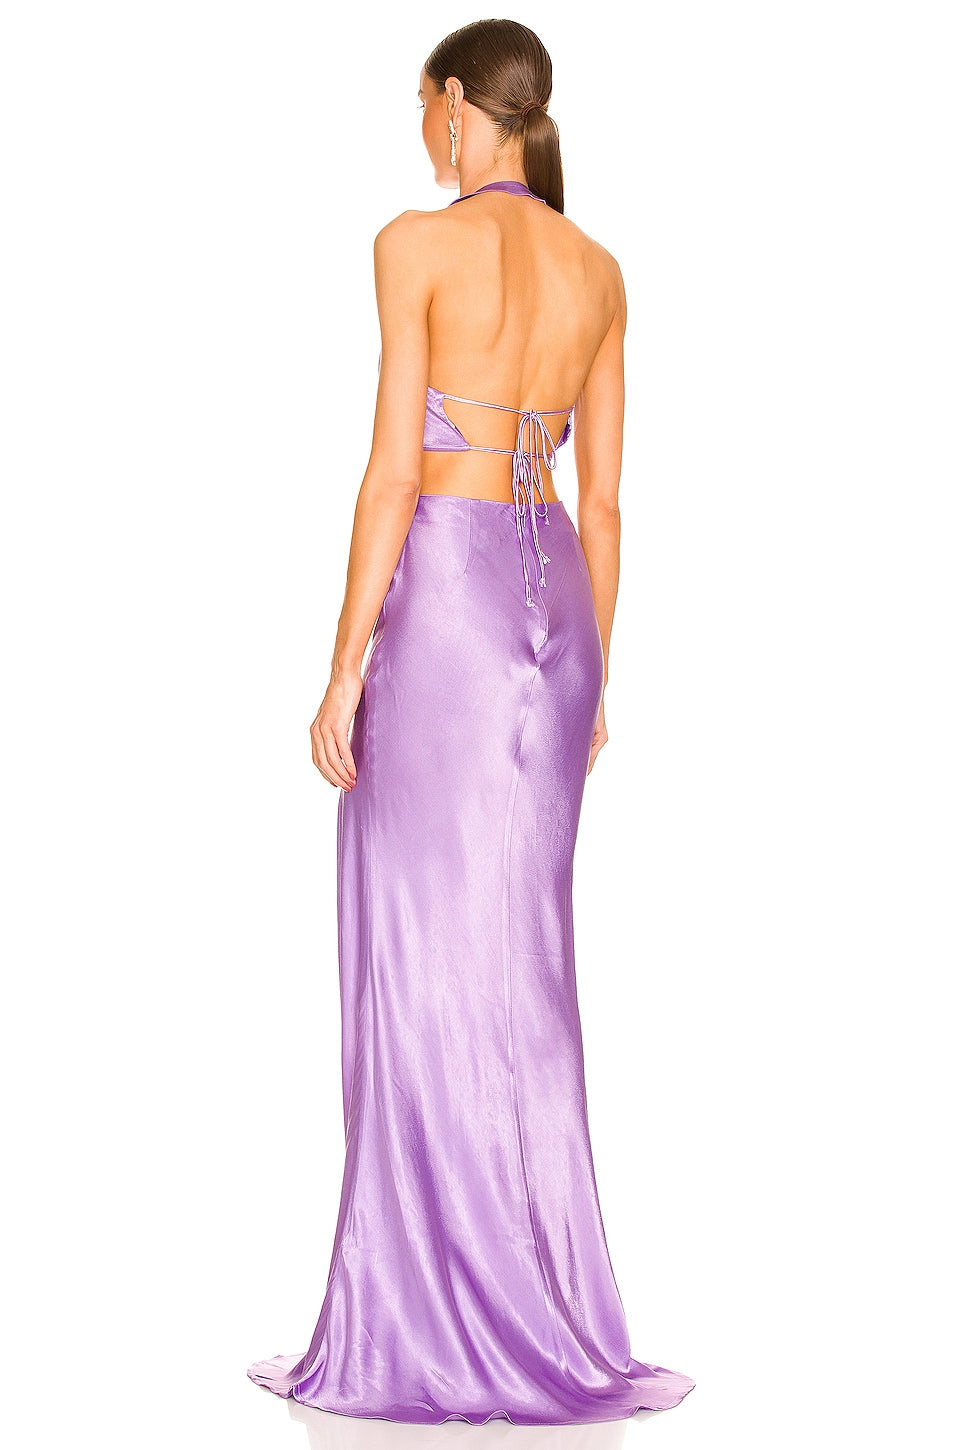 SAU LEE Salome Gown in Purple SIZE 4